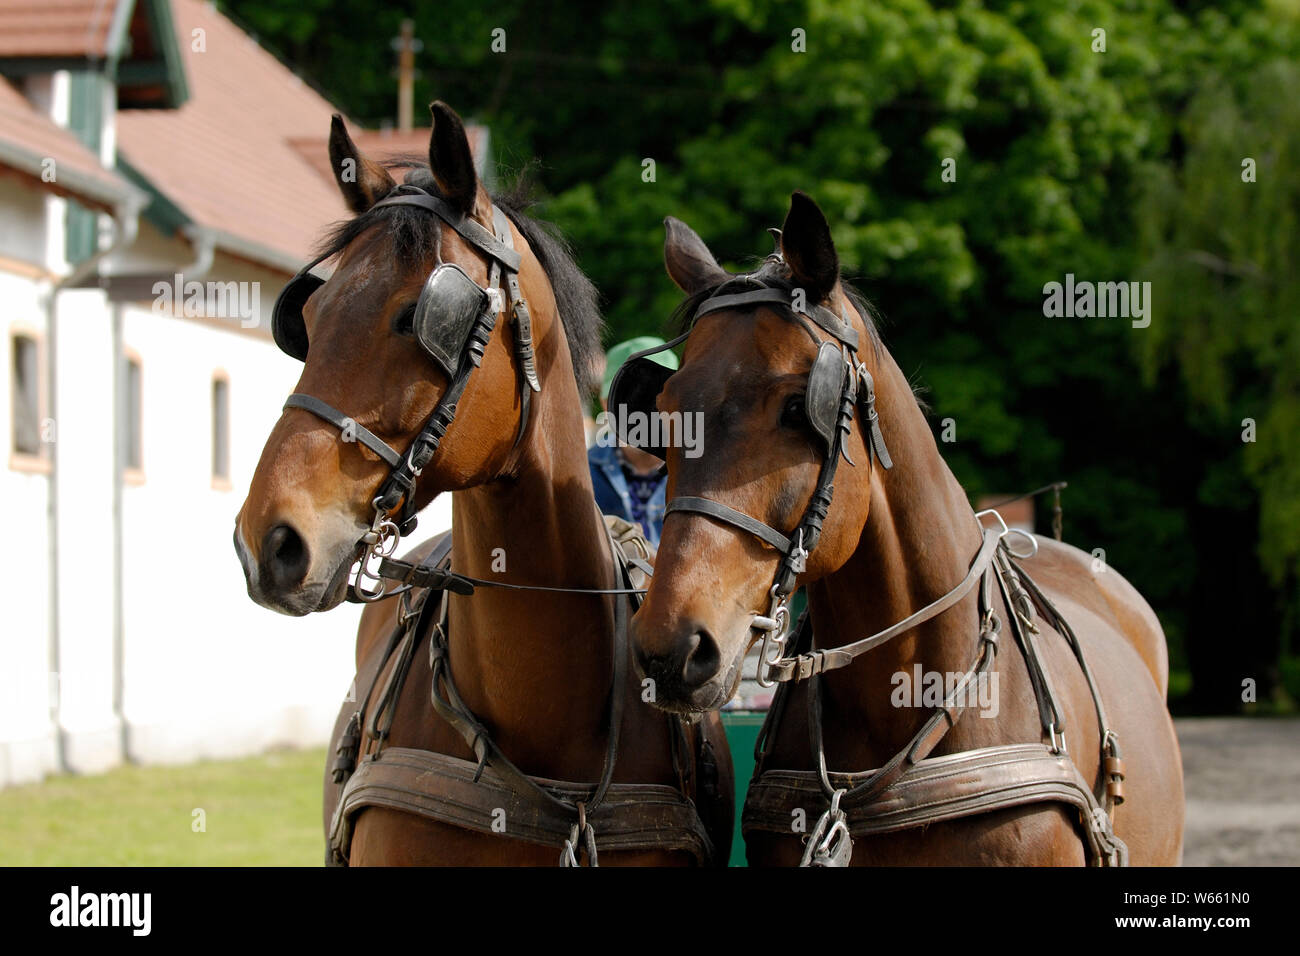 Wielkopolski horses pulling carriage Stock Photo